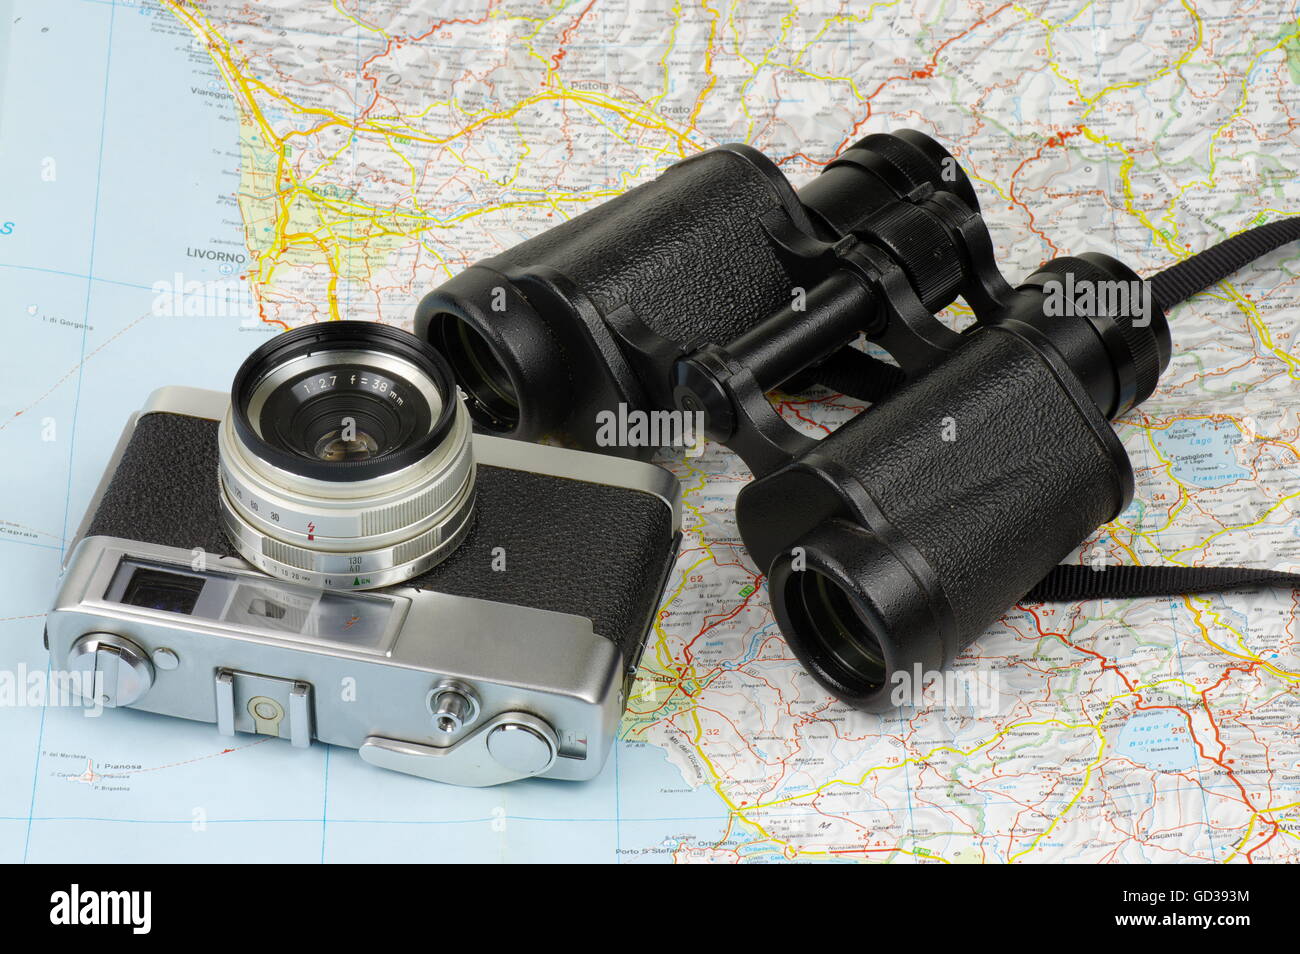 Porro binoculars and old rangefinder analog camera lying on the map. Stock Photo